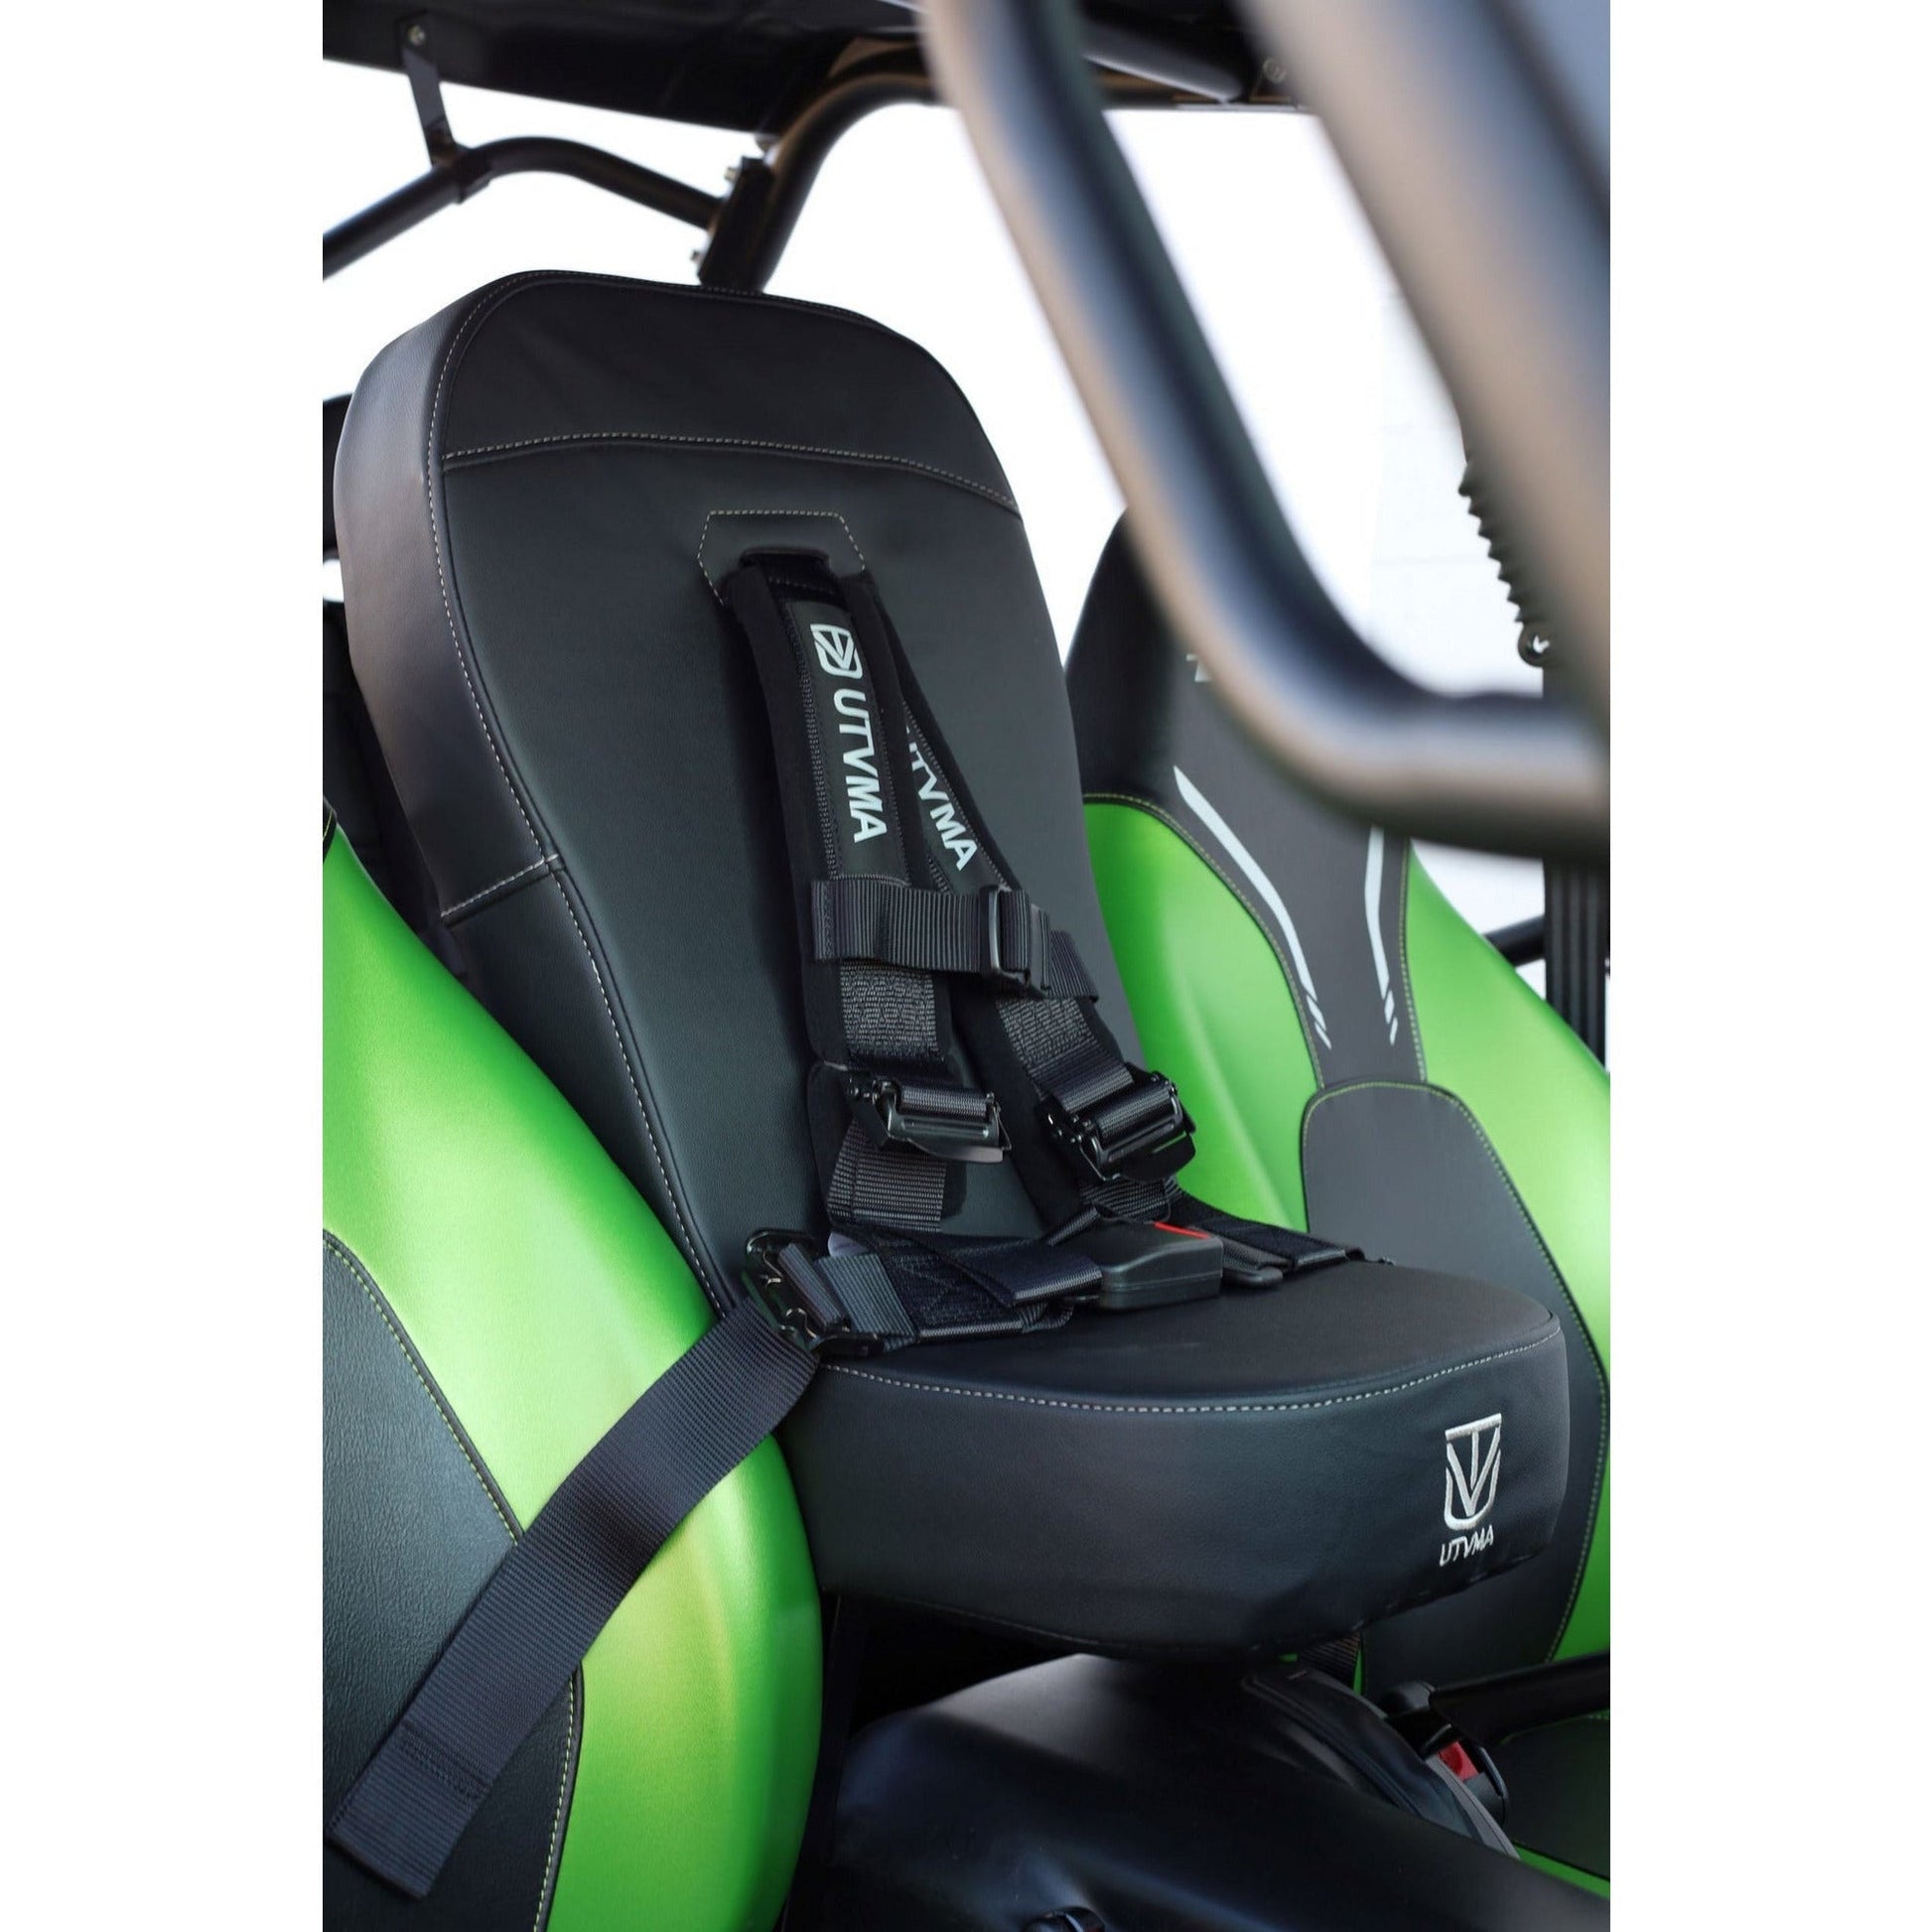 Kawasaki Teryx Front Bump Seat with Harness